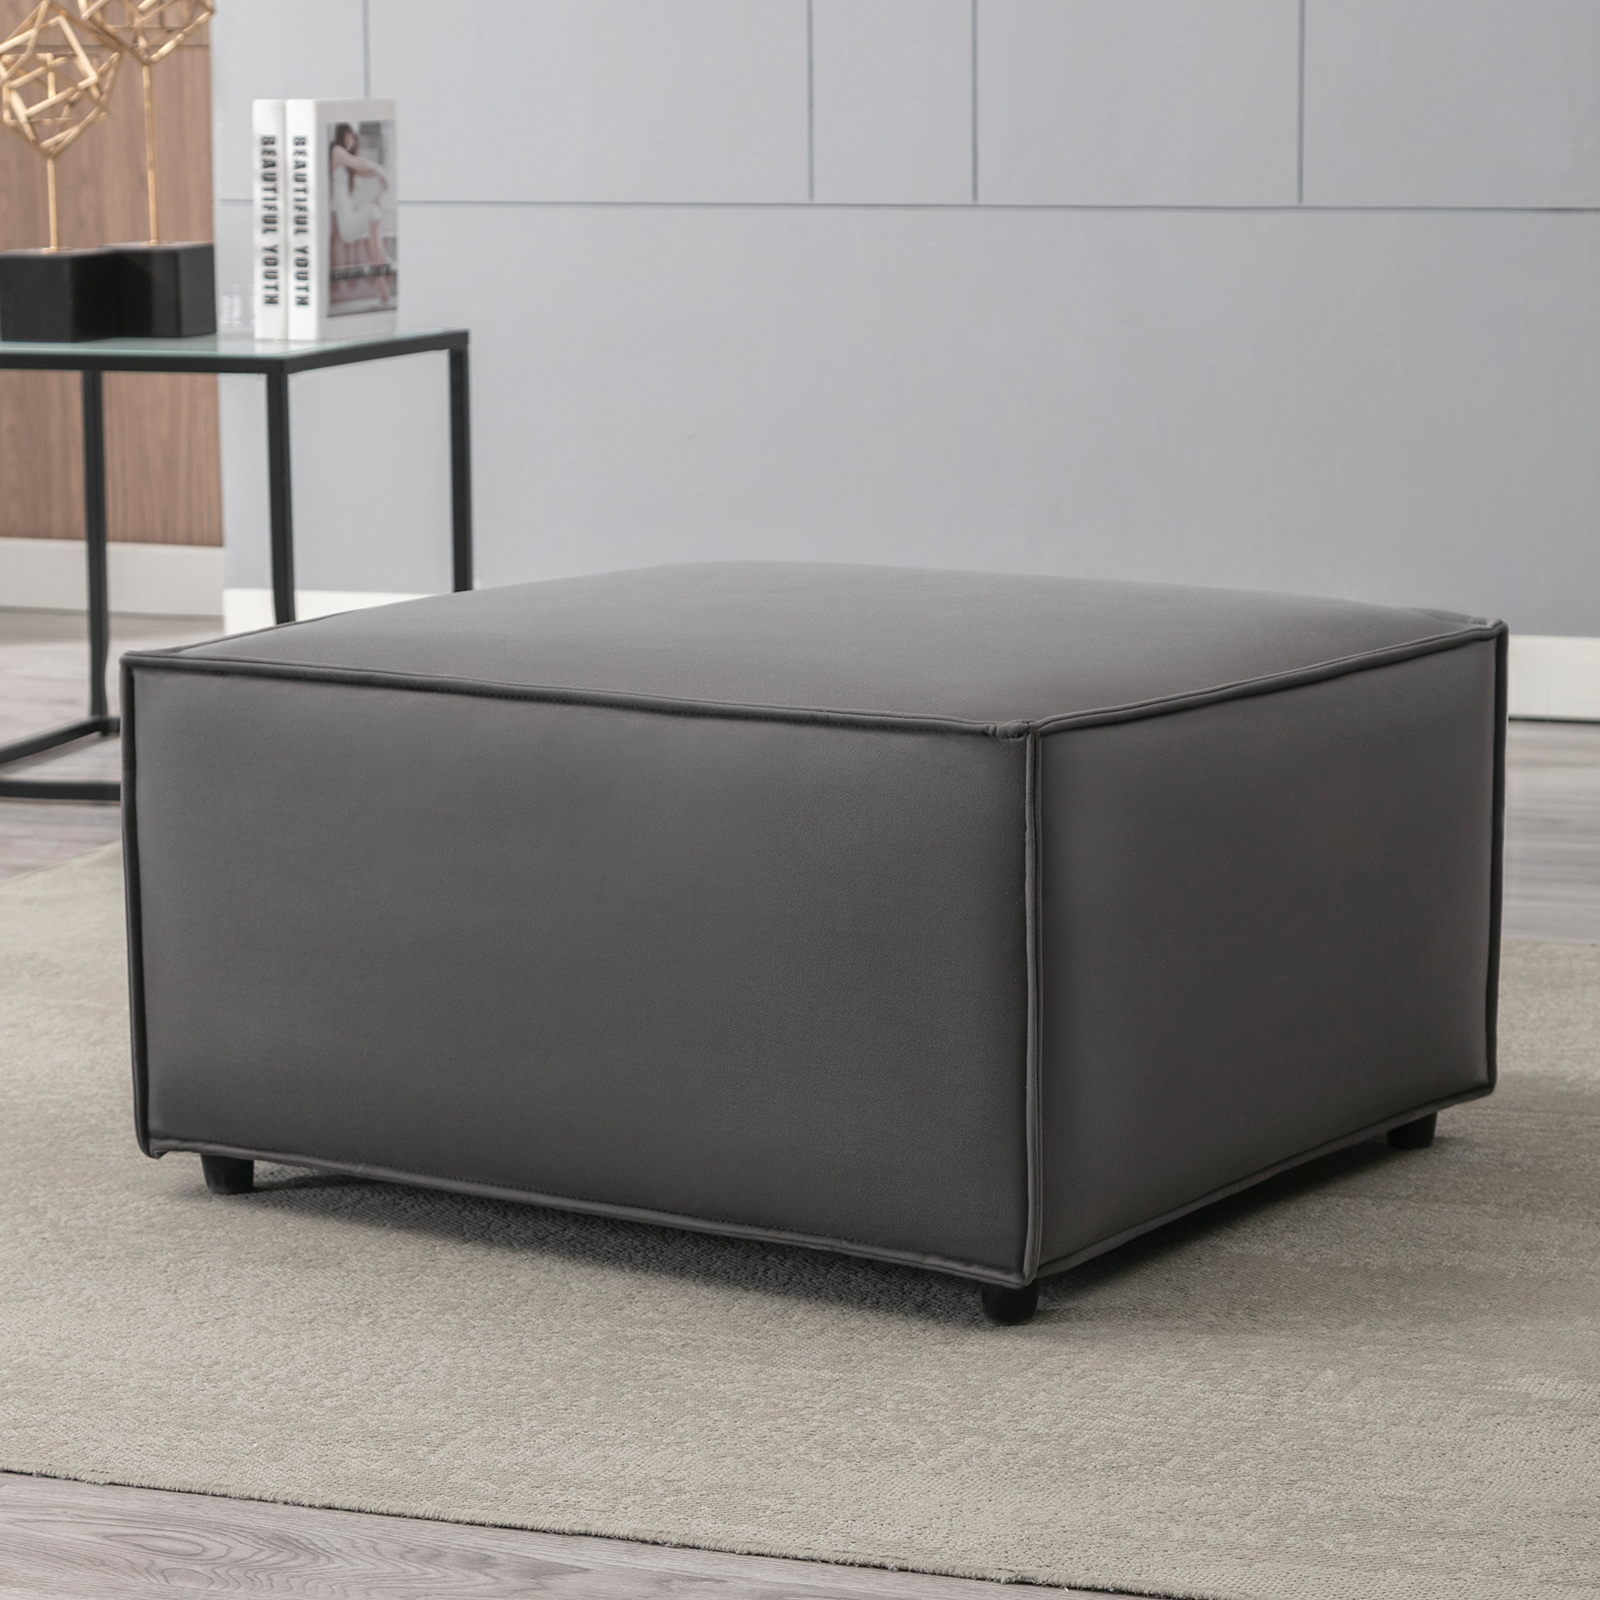 Mjkone Modern Loveseat Convertible Modular Sectional Sofa Set